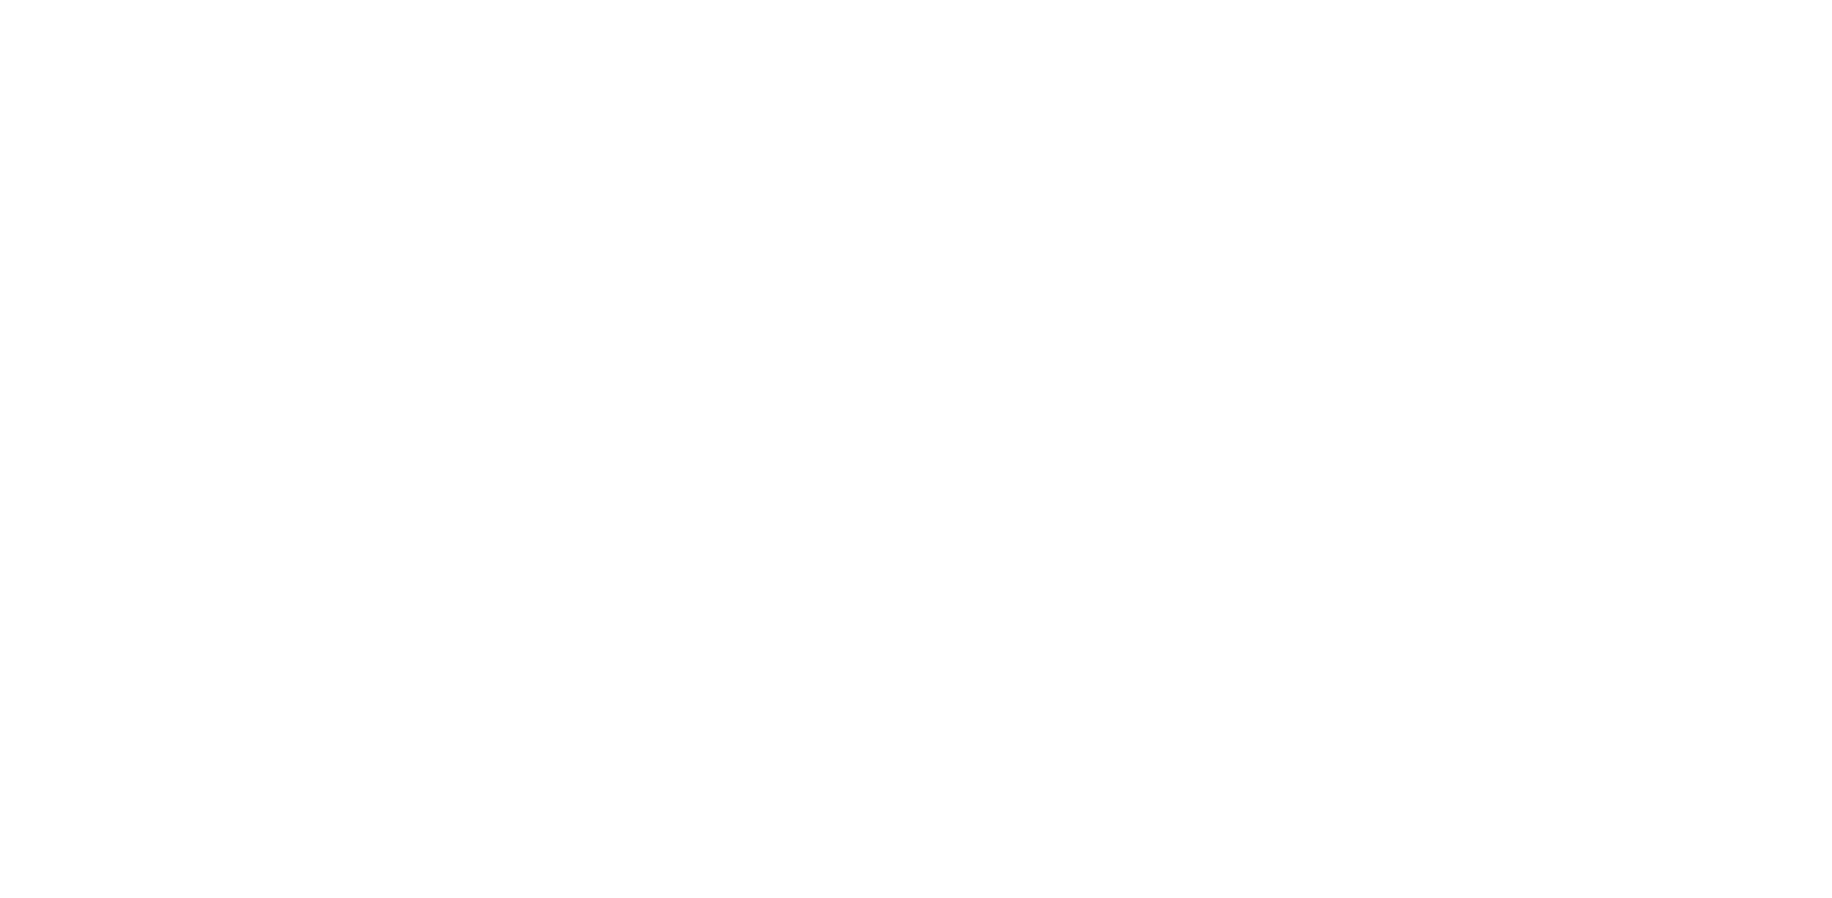 AKAZU: Off limits